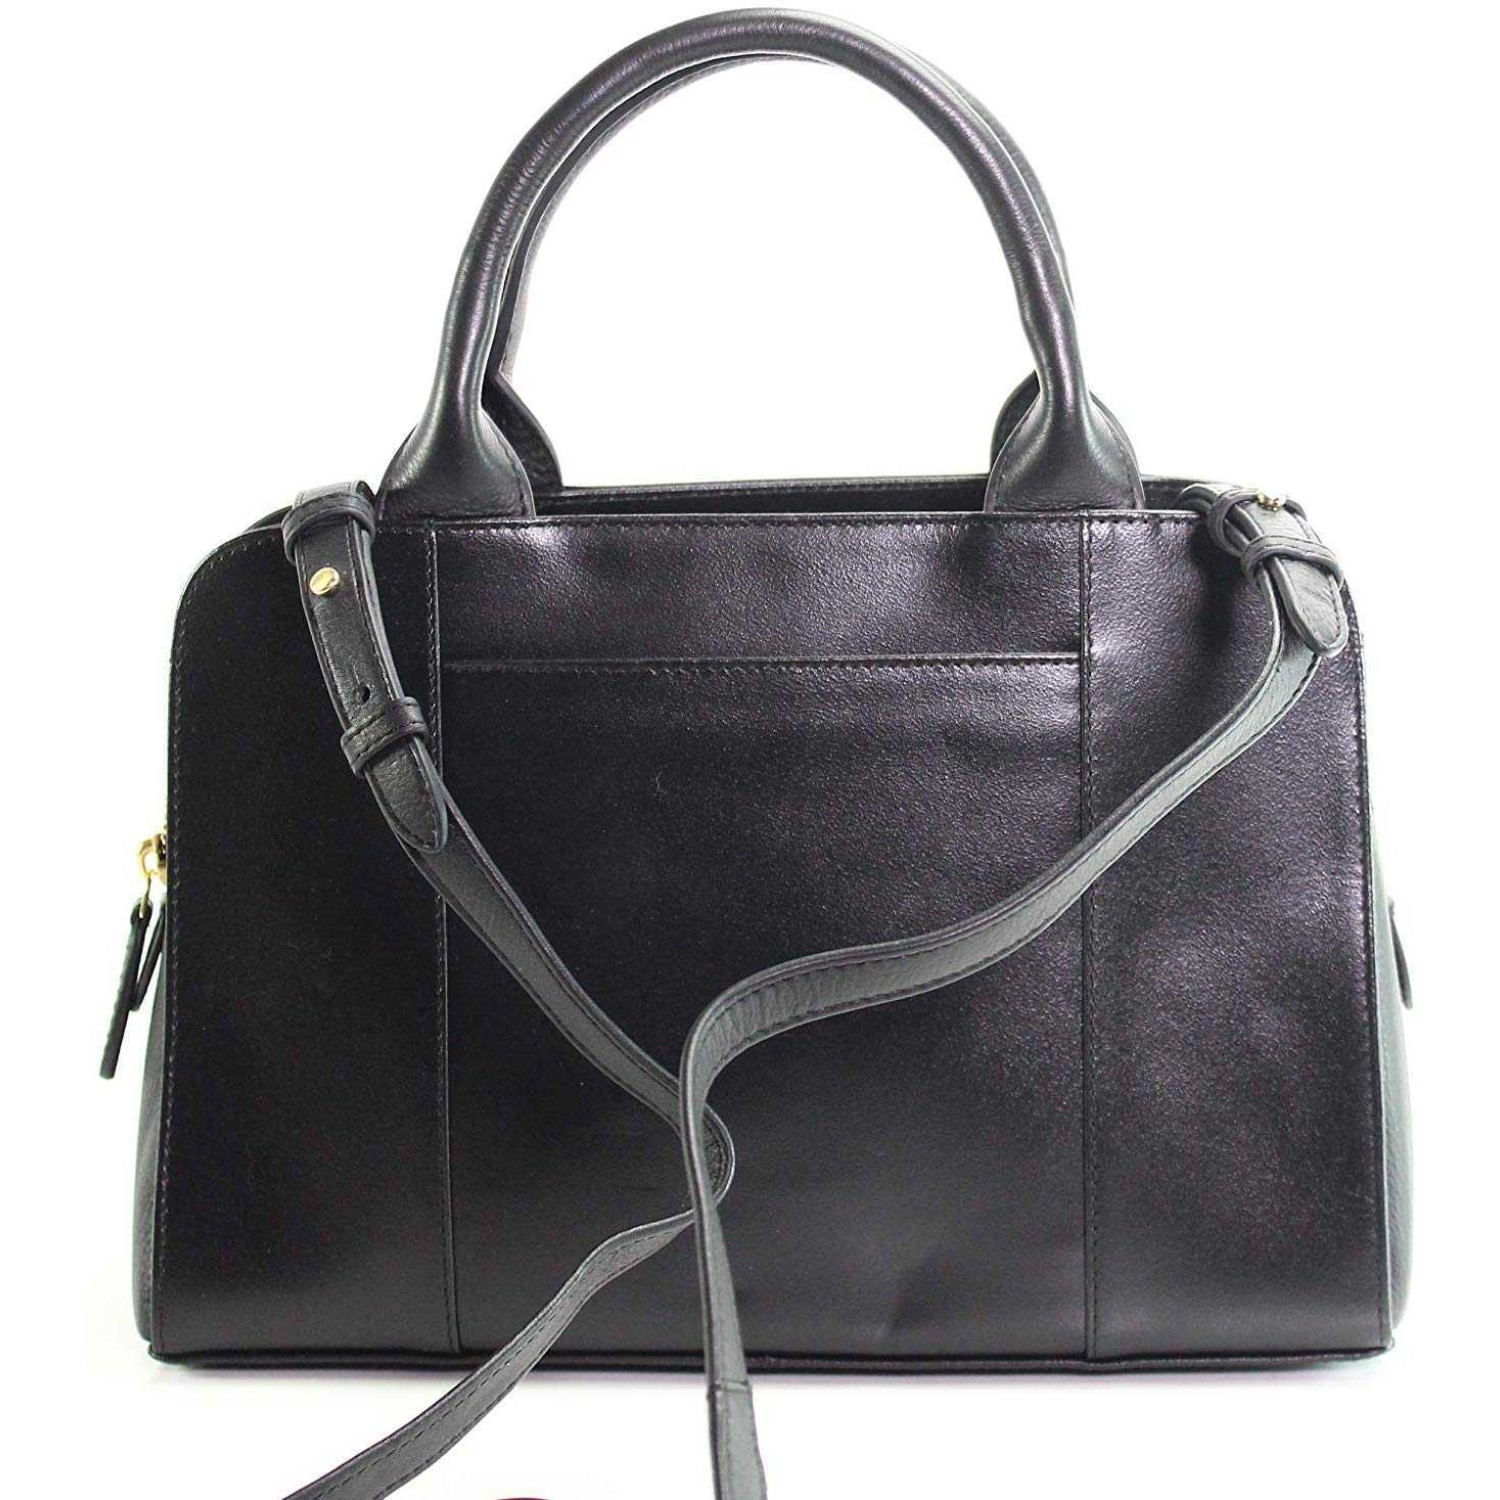 Radley London Millbank Leather Handbag Satchel (Black)